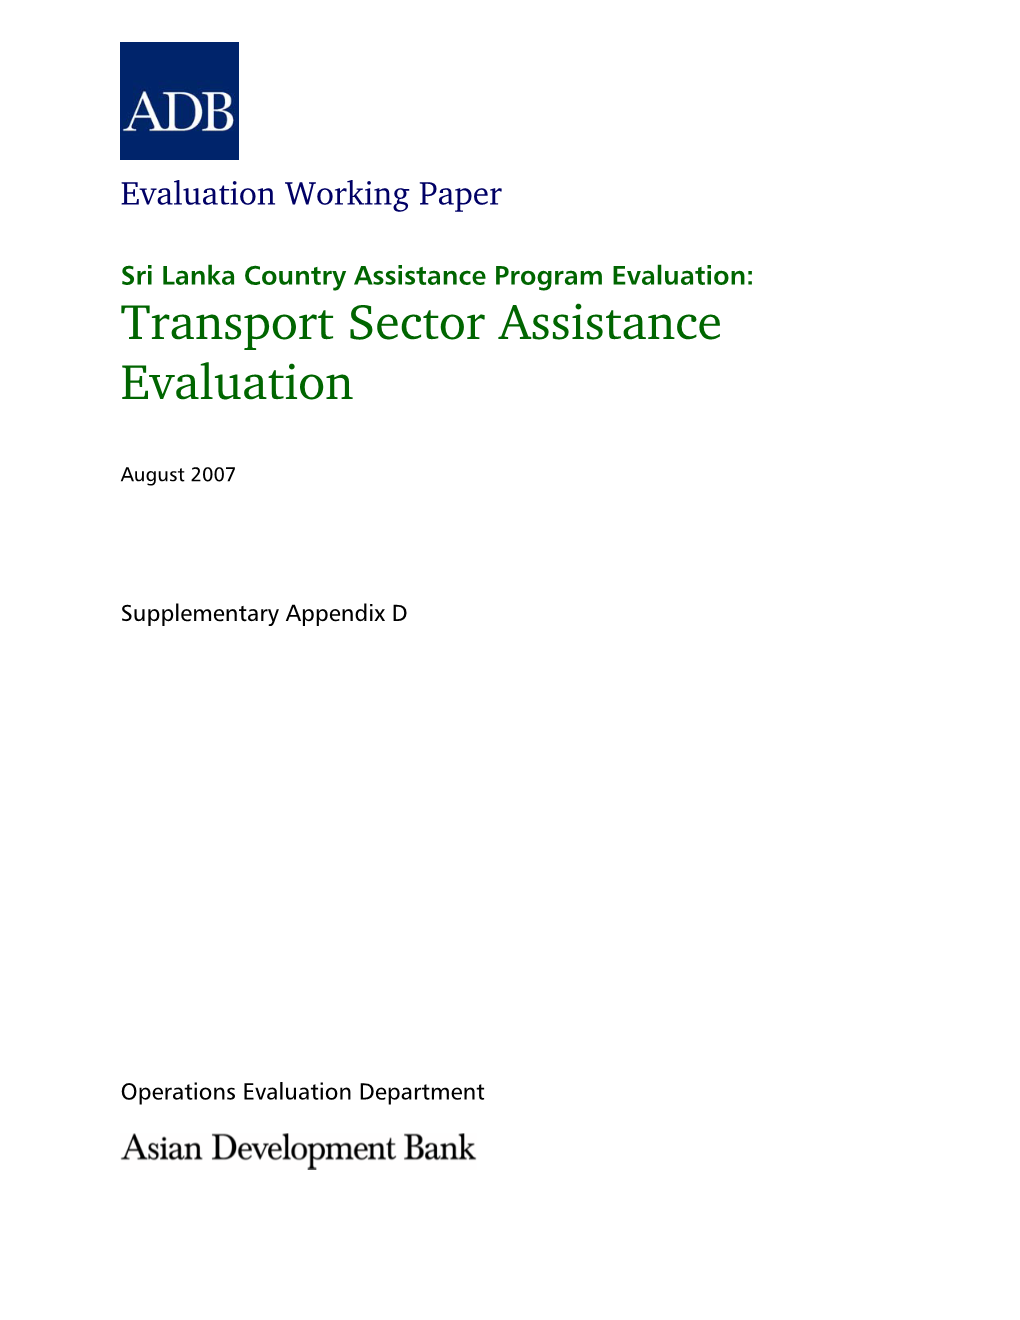 Evaluation of Transport Sector Assistance in Sri Lanka